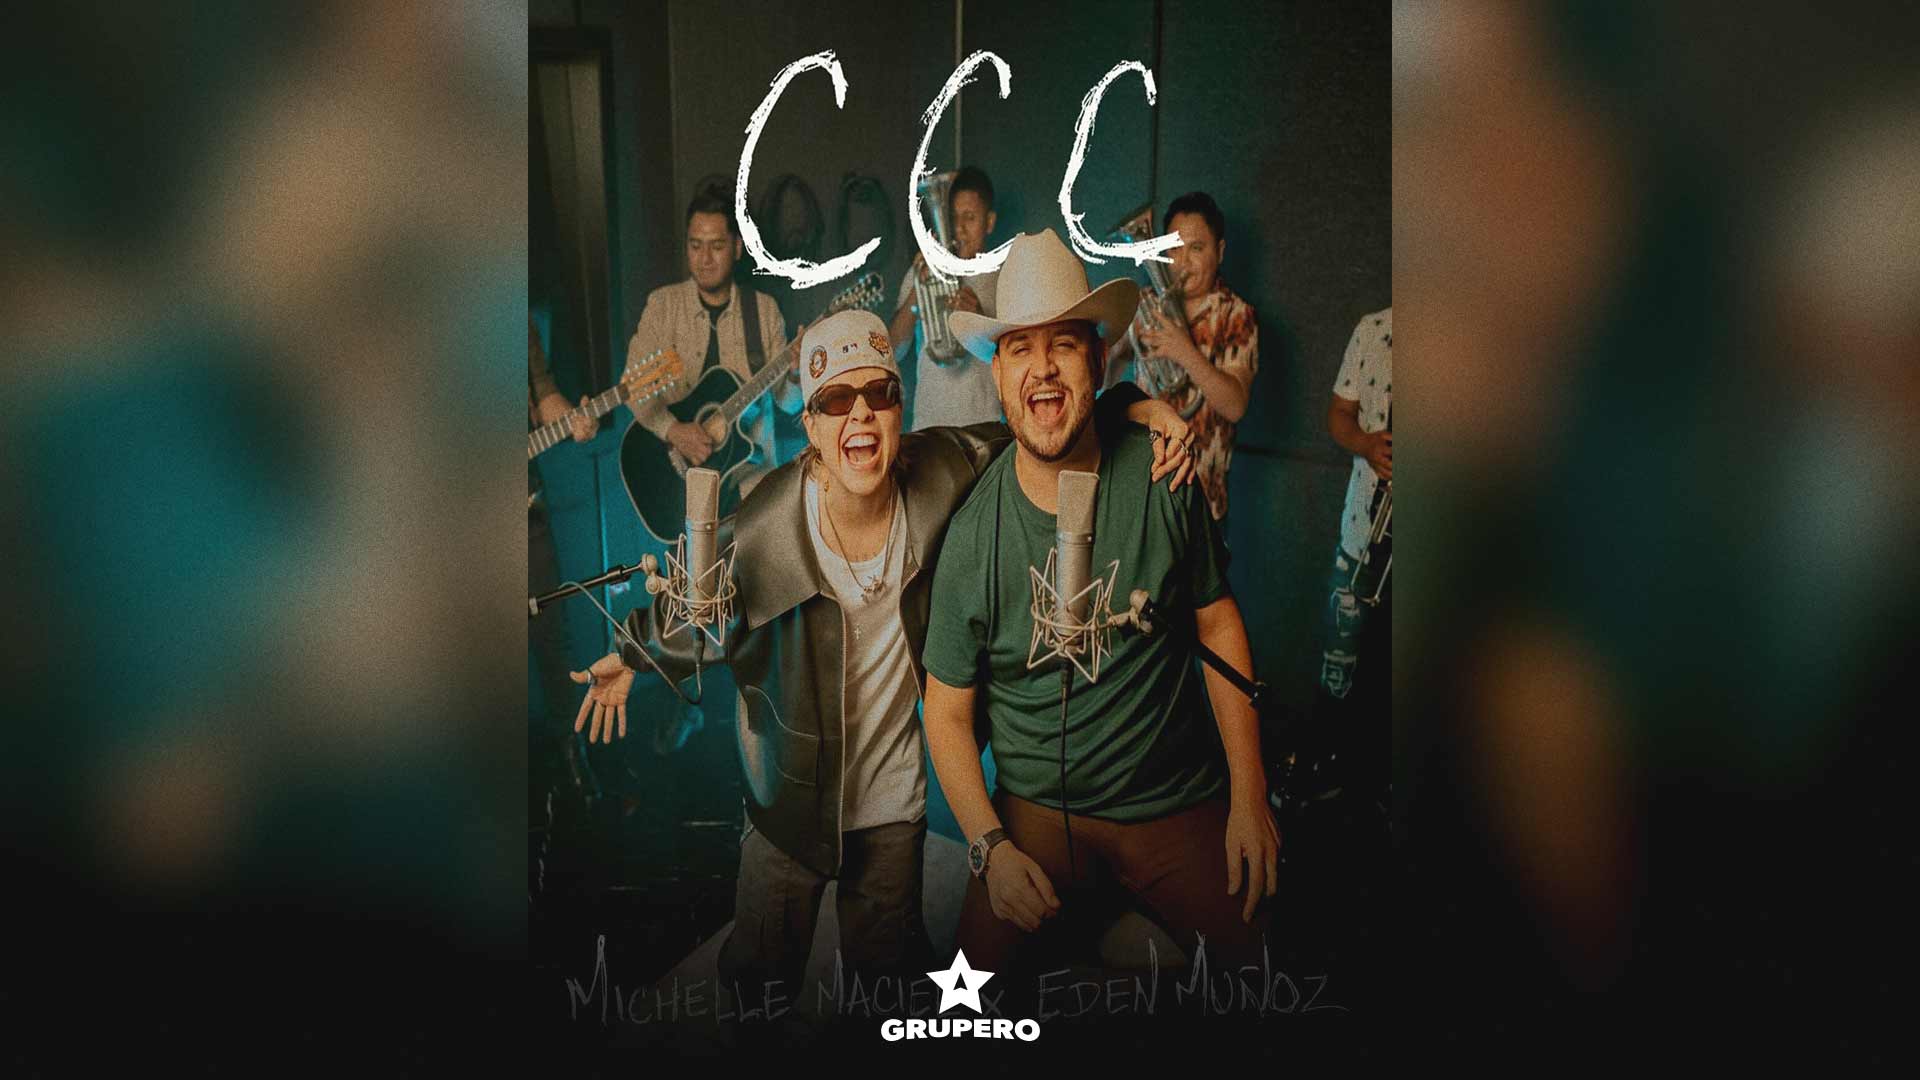 Letra “CCC” – Michelle Maciel & Edén Muñoz